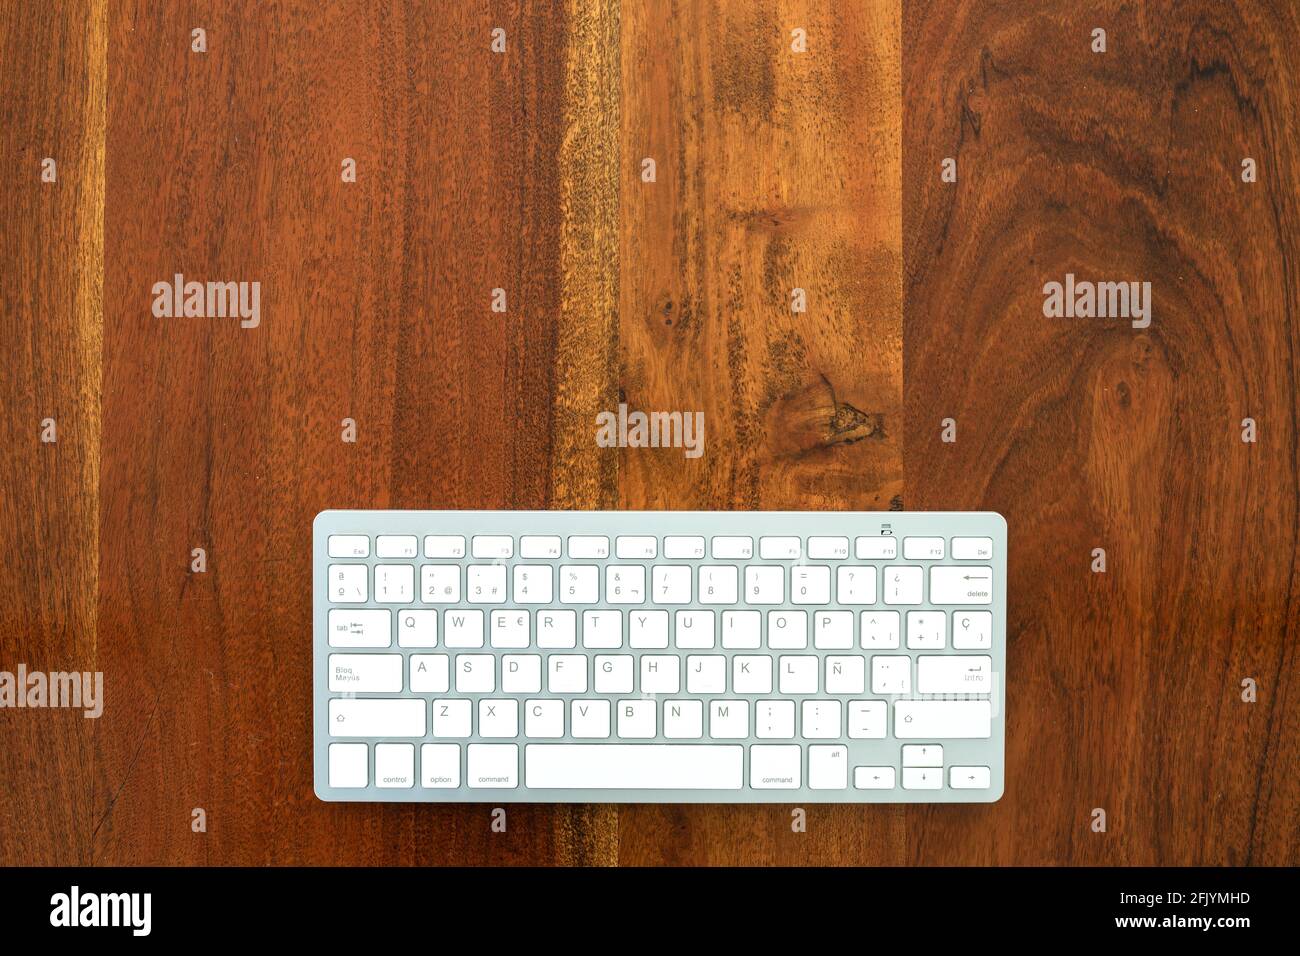 Wireless keyboard on wooden table. Stock Photo